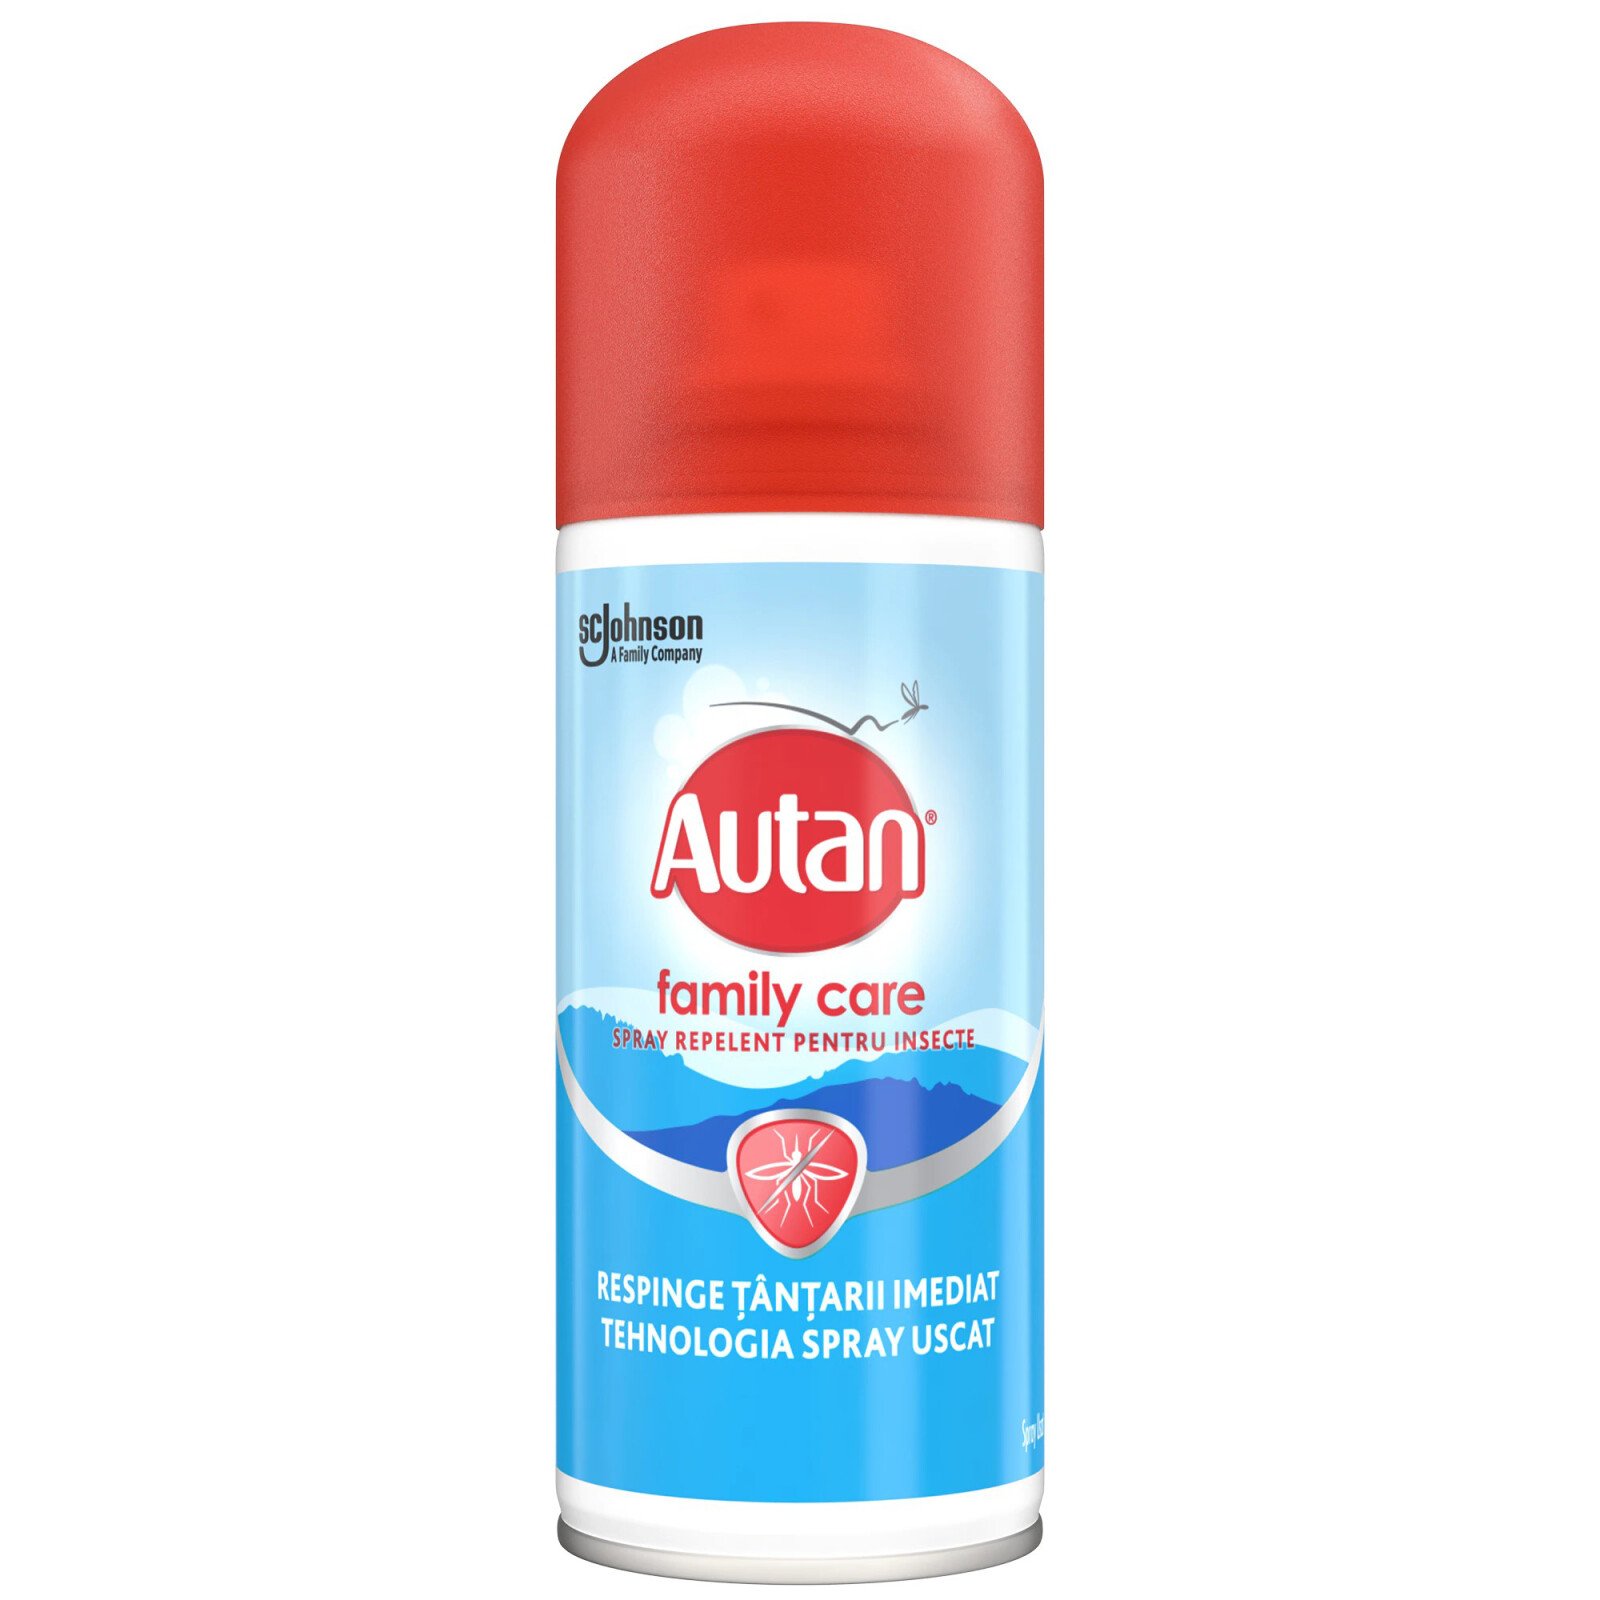 Mosquitos repellent Autan Family Care, spray 100ml thumb